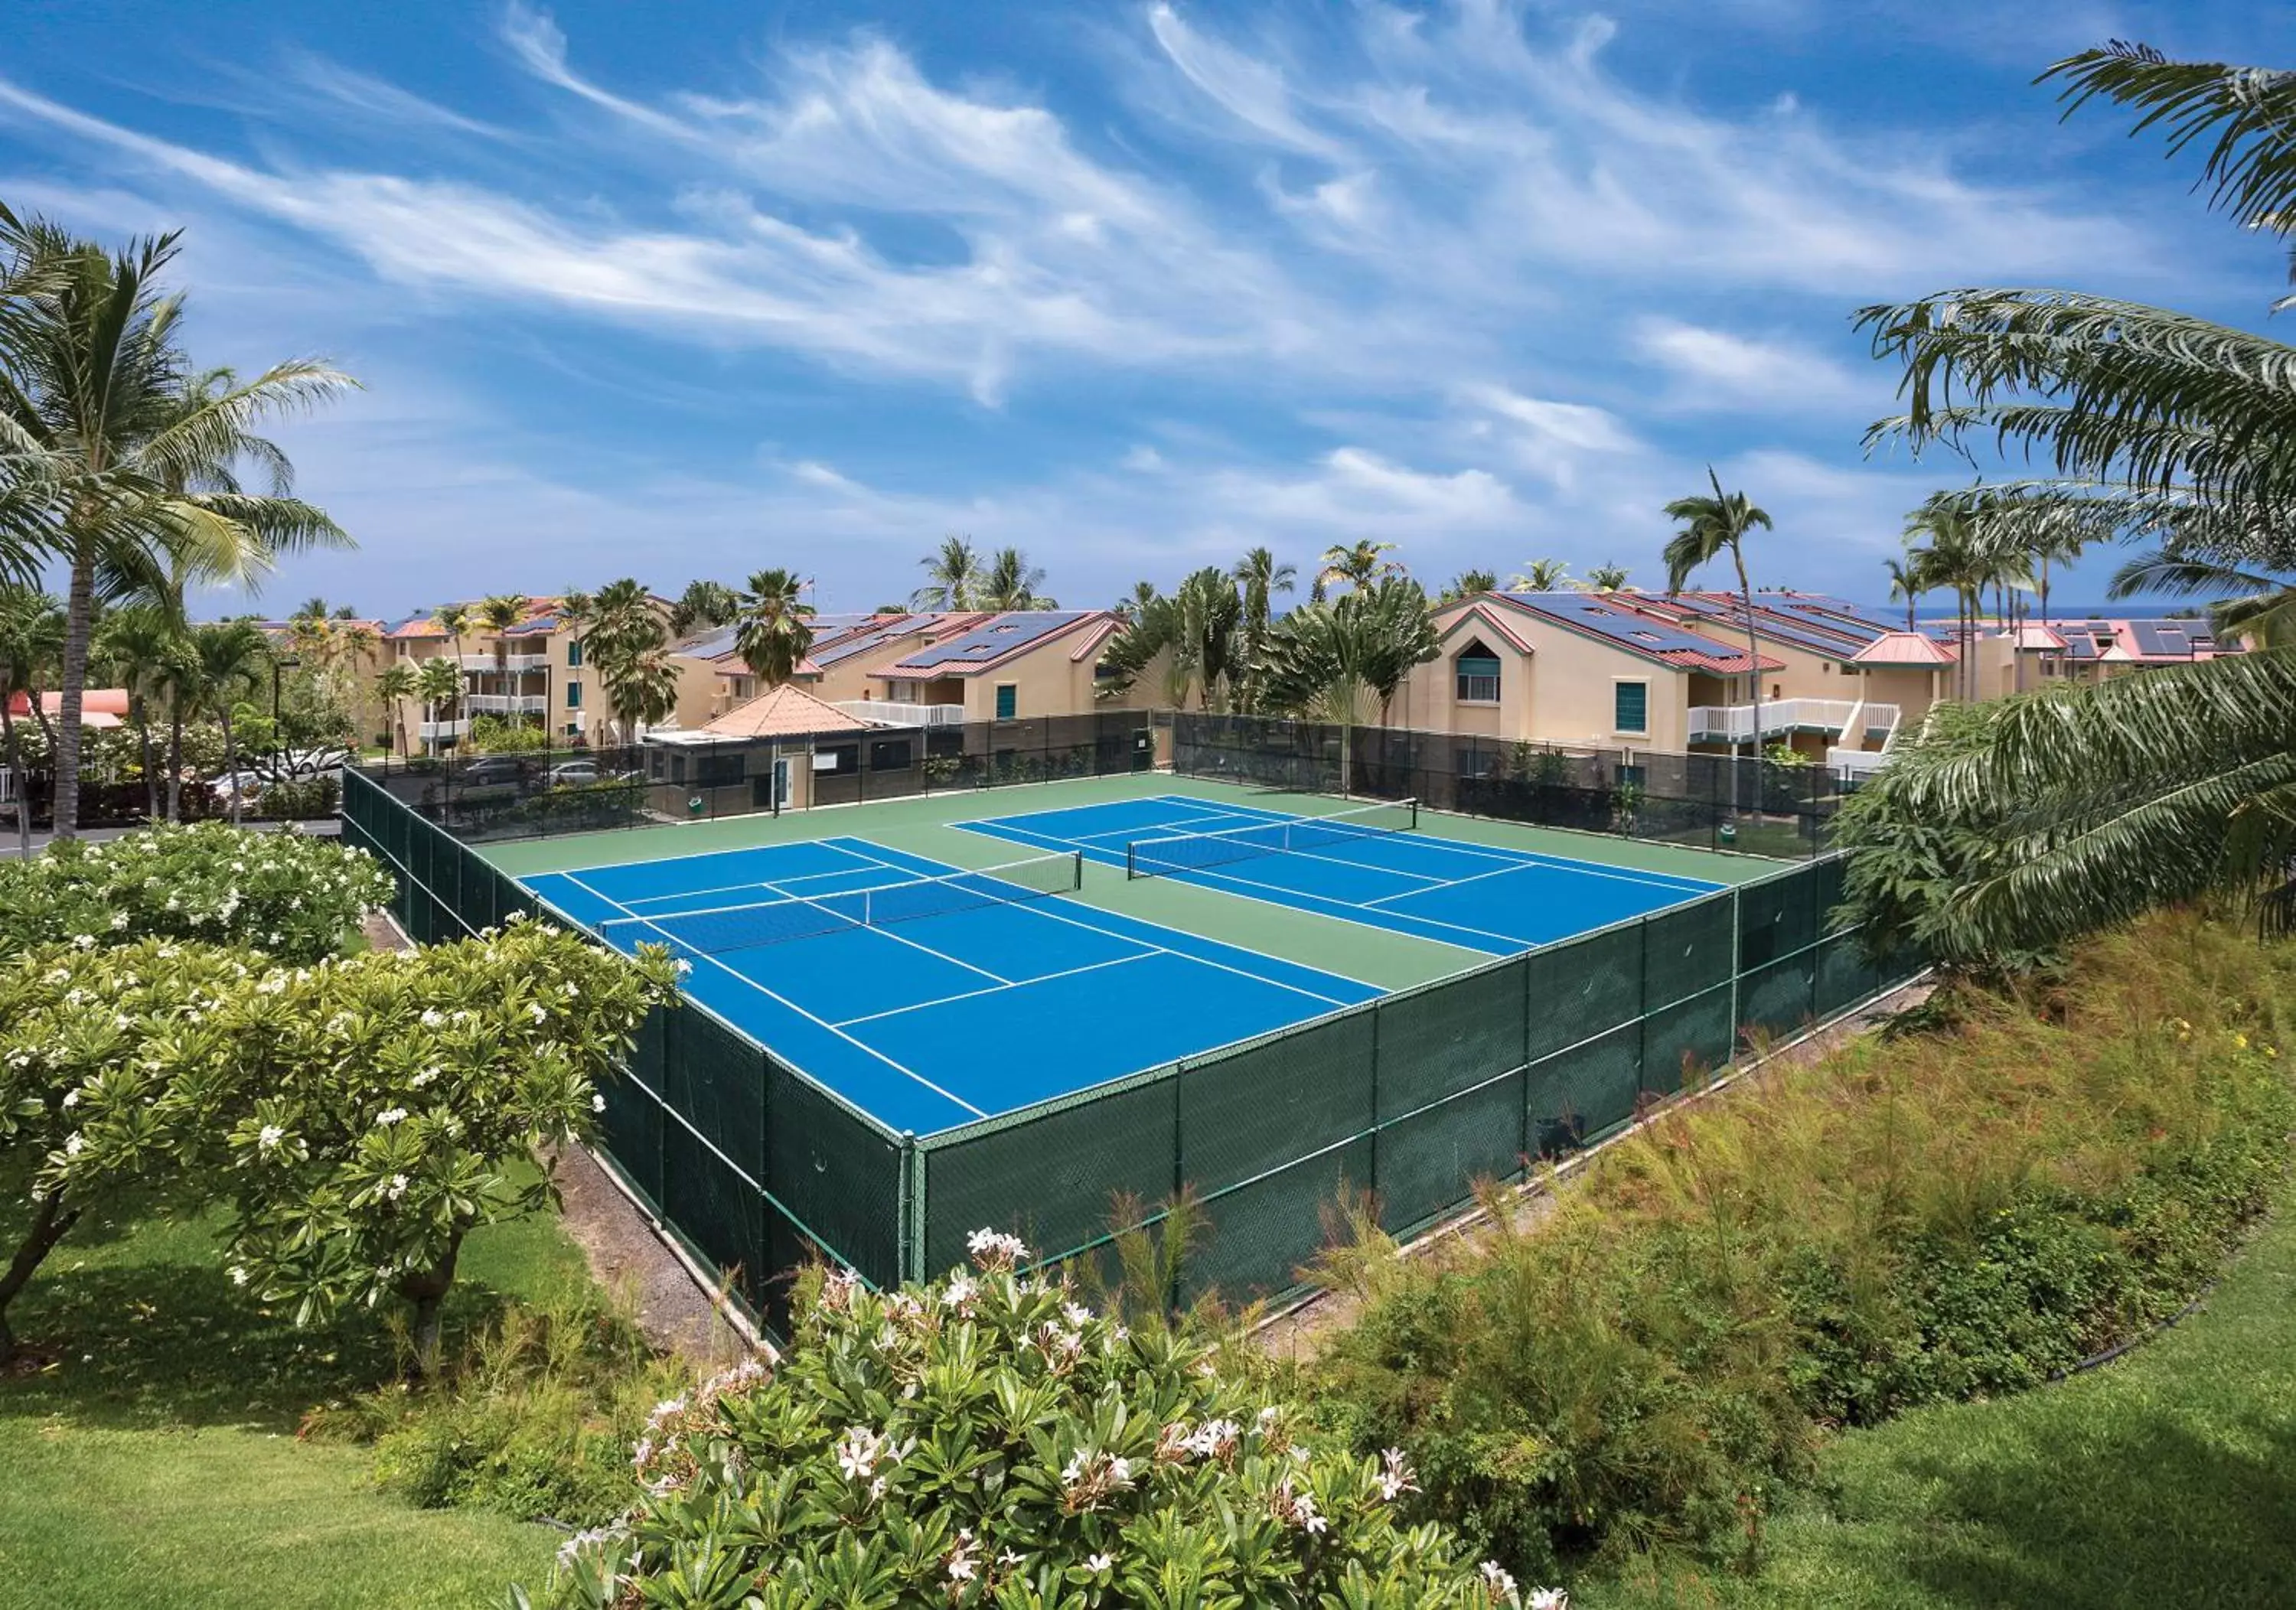 Tennis court in Kona Coast Resort